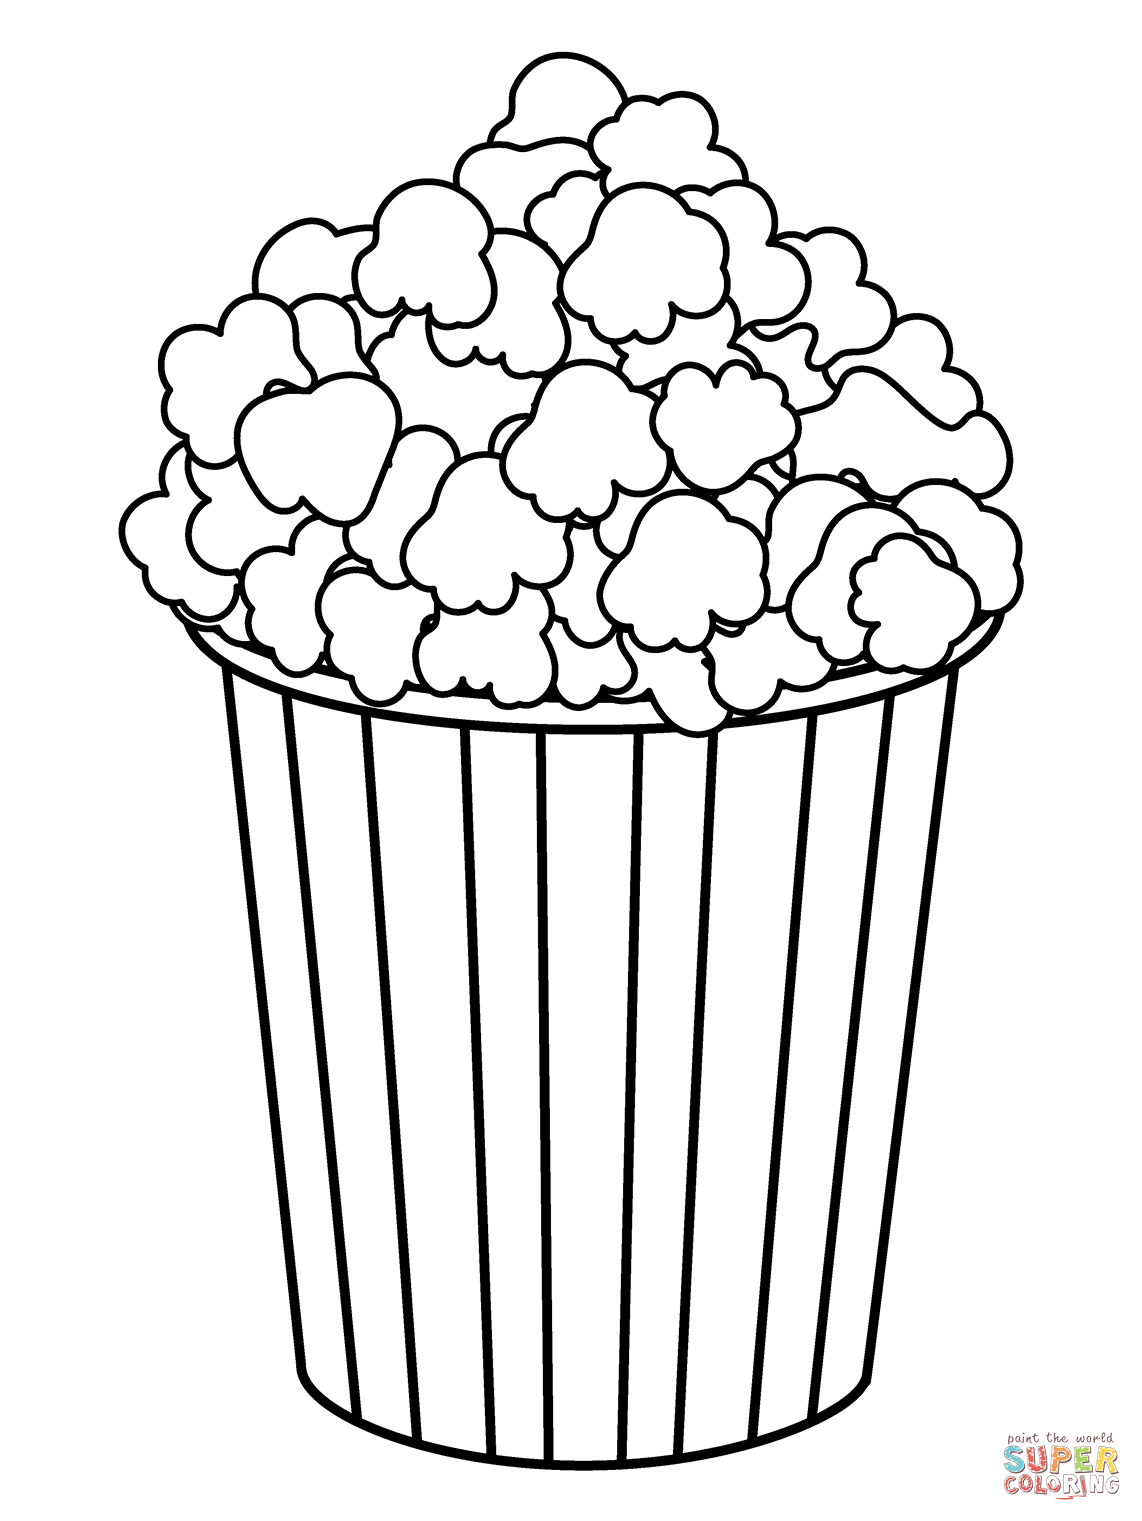 Popcorn emoji coloring page free printable coloring pages